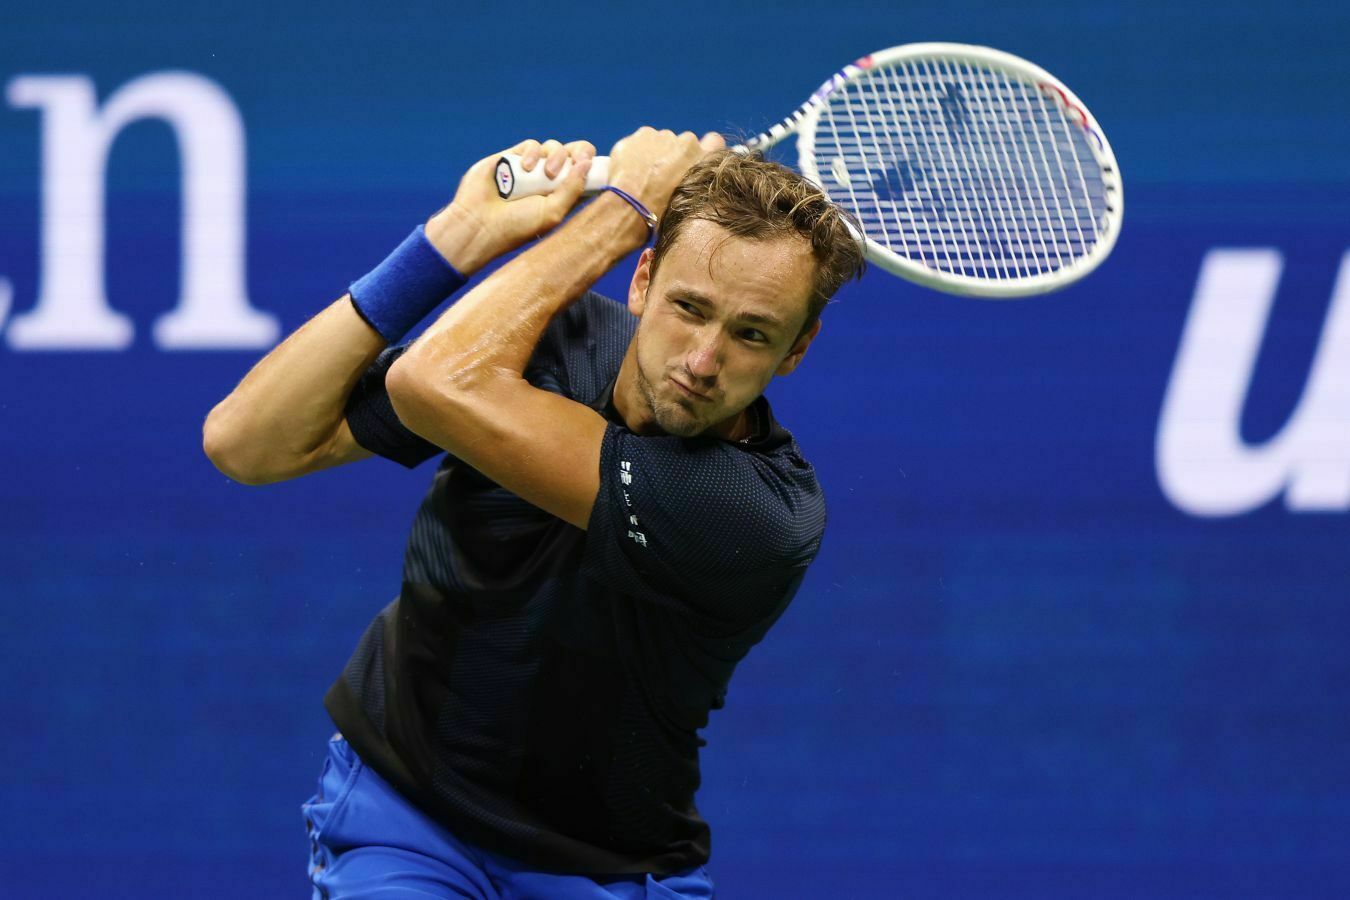 Tennis player Daniil Medvedev fails to defend US Open title